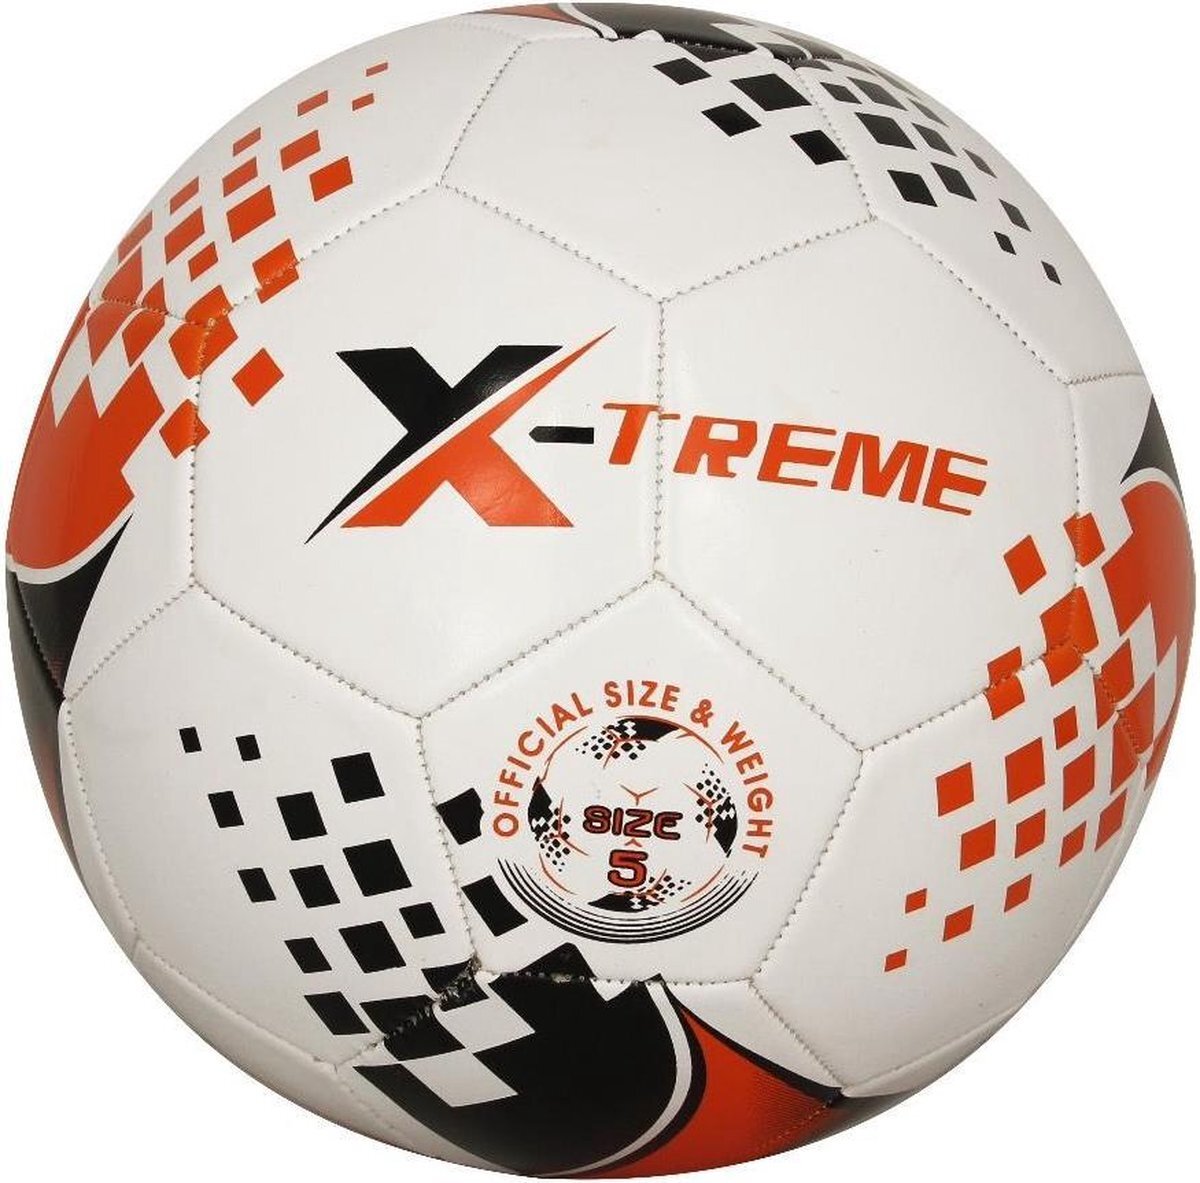 Jollity Works Xtreme voetbal 5 - Panna - oranje